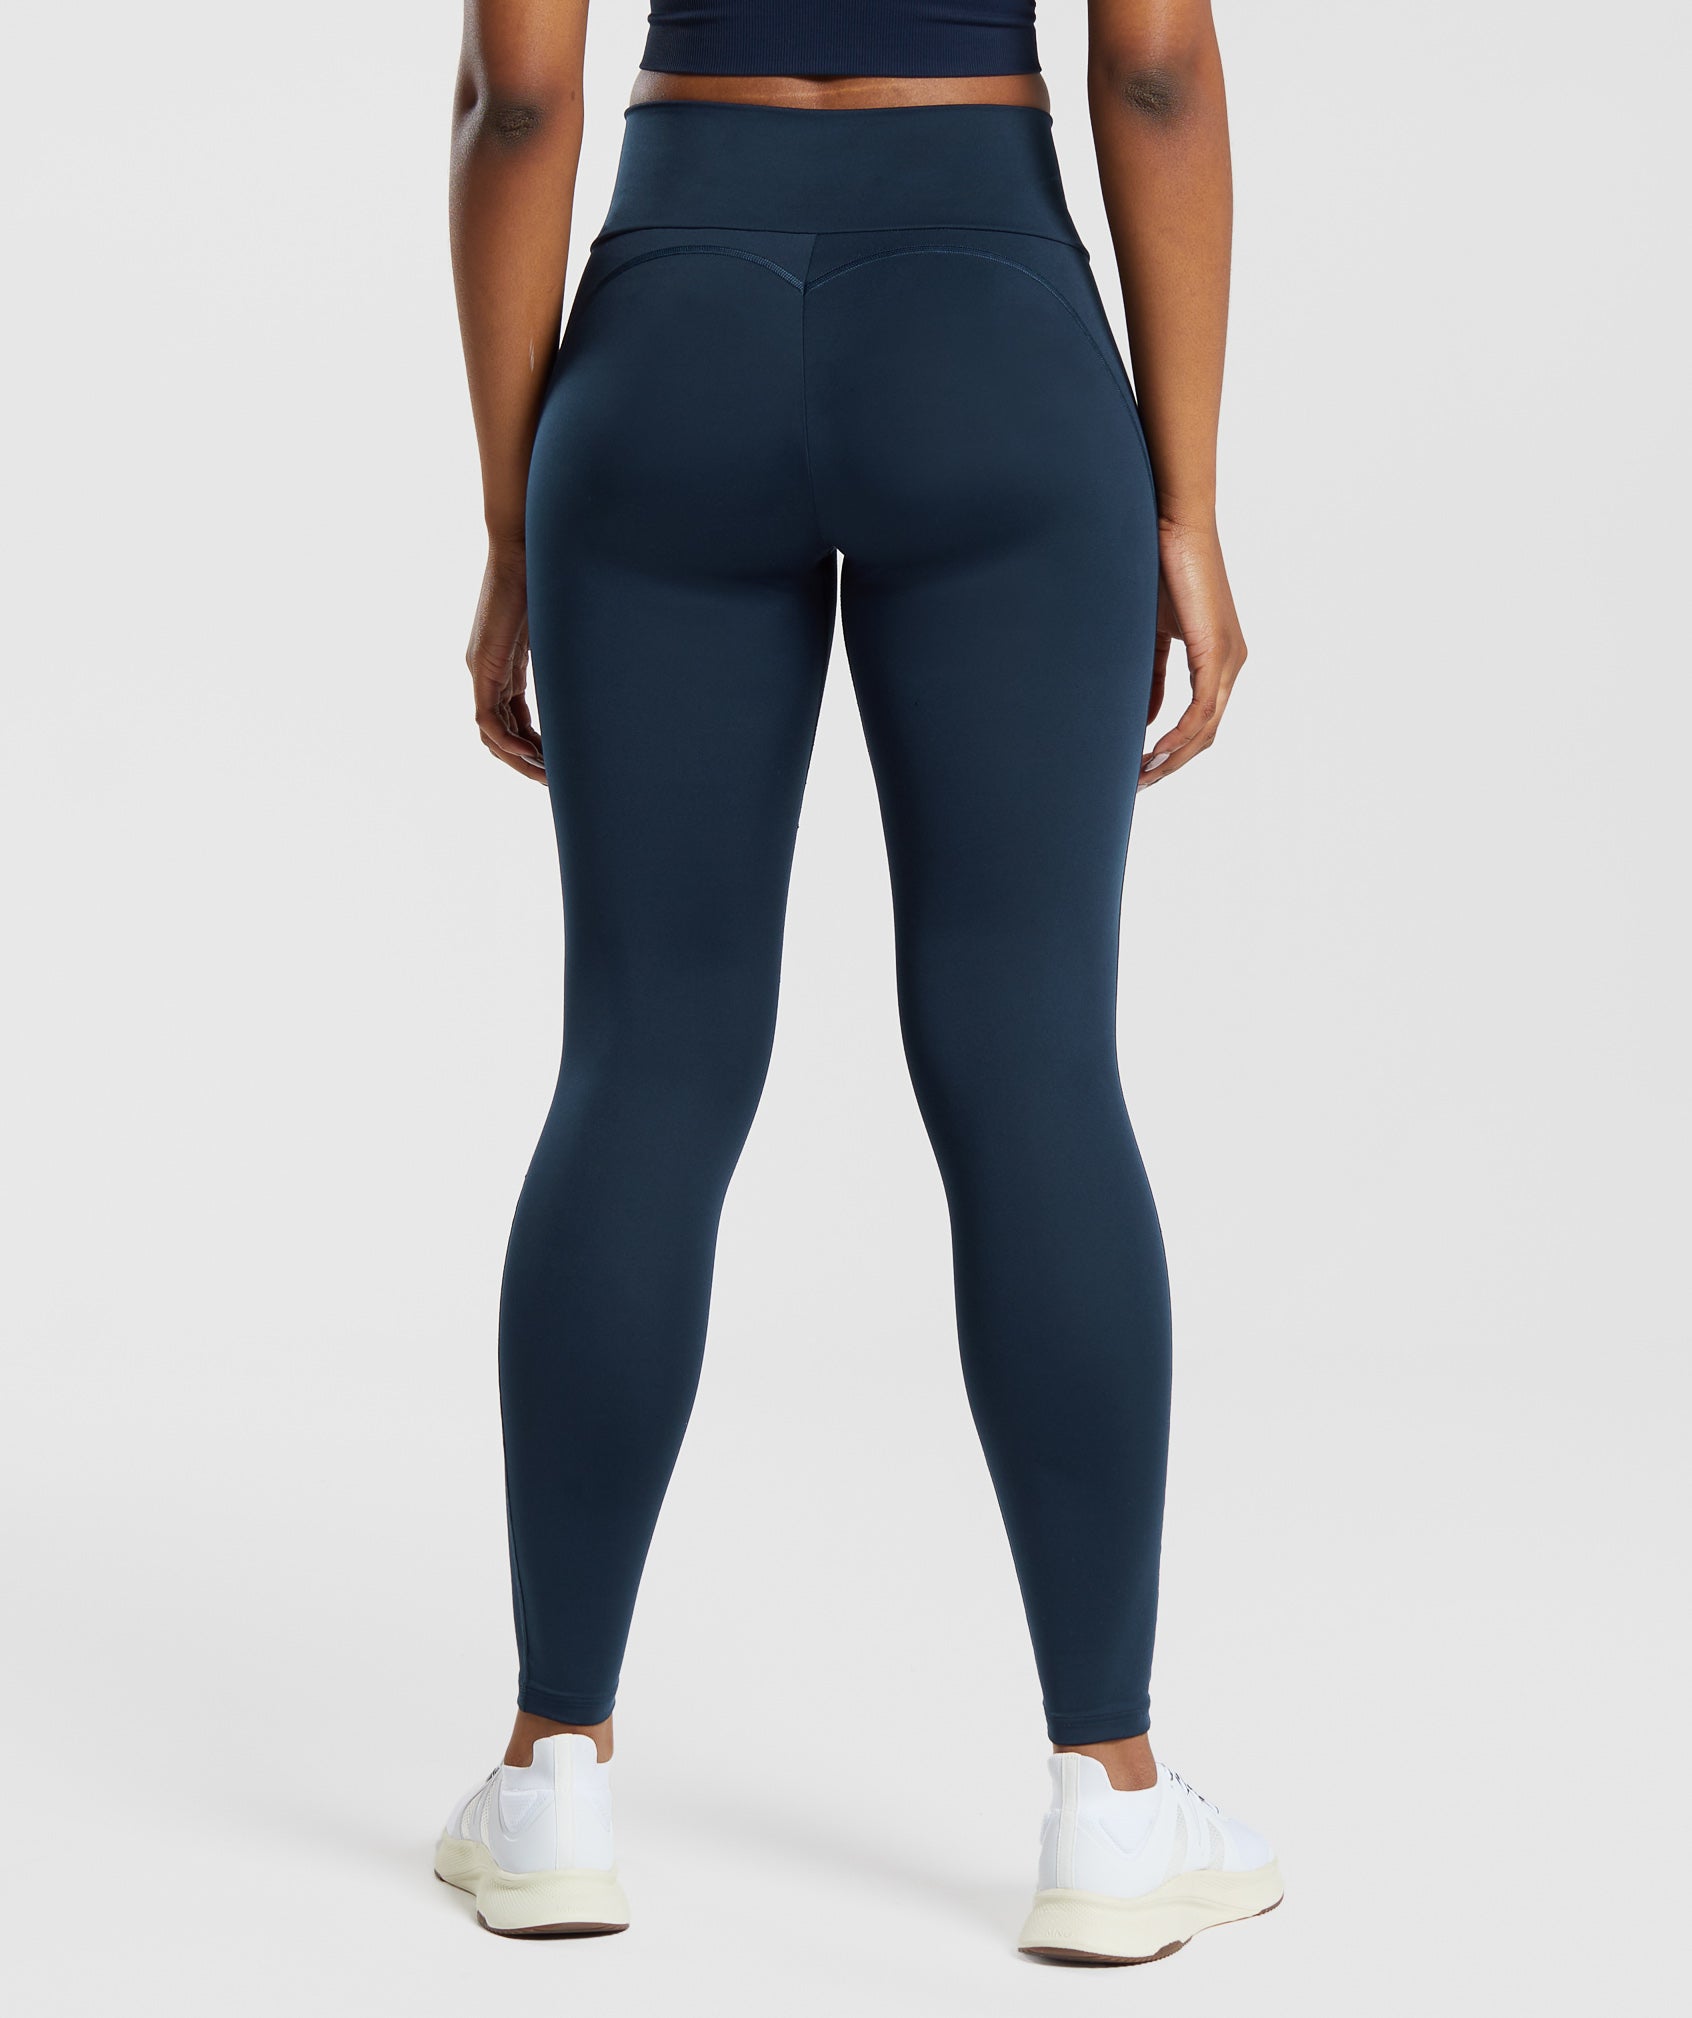 GYMSHARK Leggings Size Small Blue Aqua Athletic Workout Compression Pants